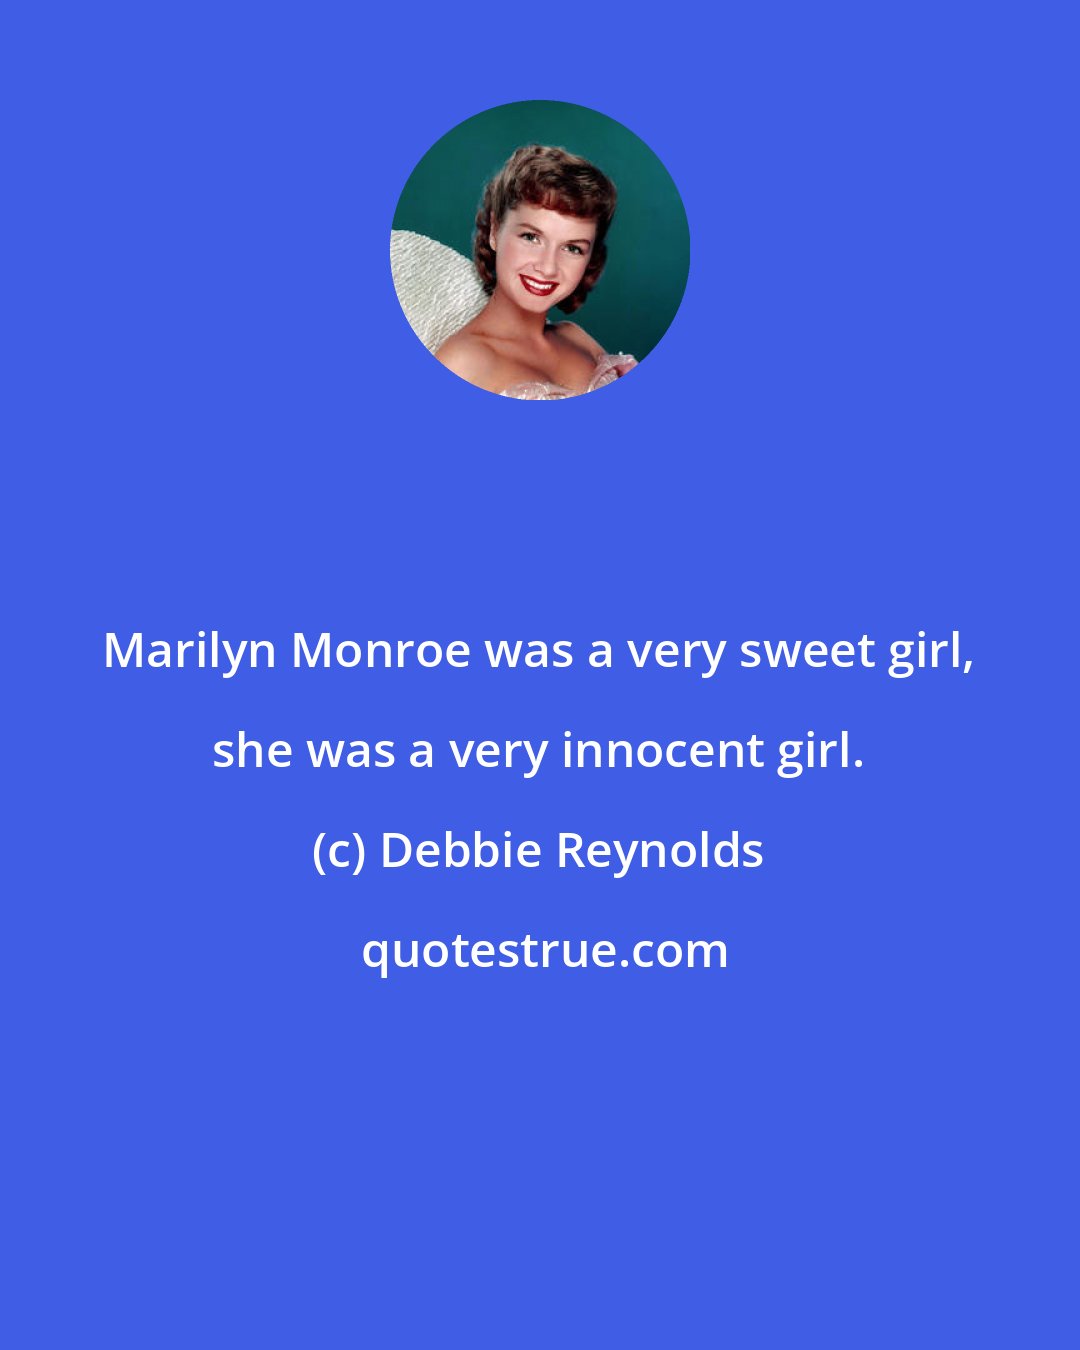 Debbie Reynolds: Marilyn Monroe was a very sweet girl, she was a very innocent girl.